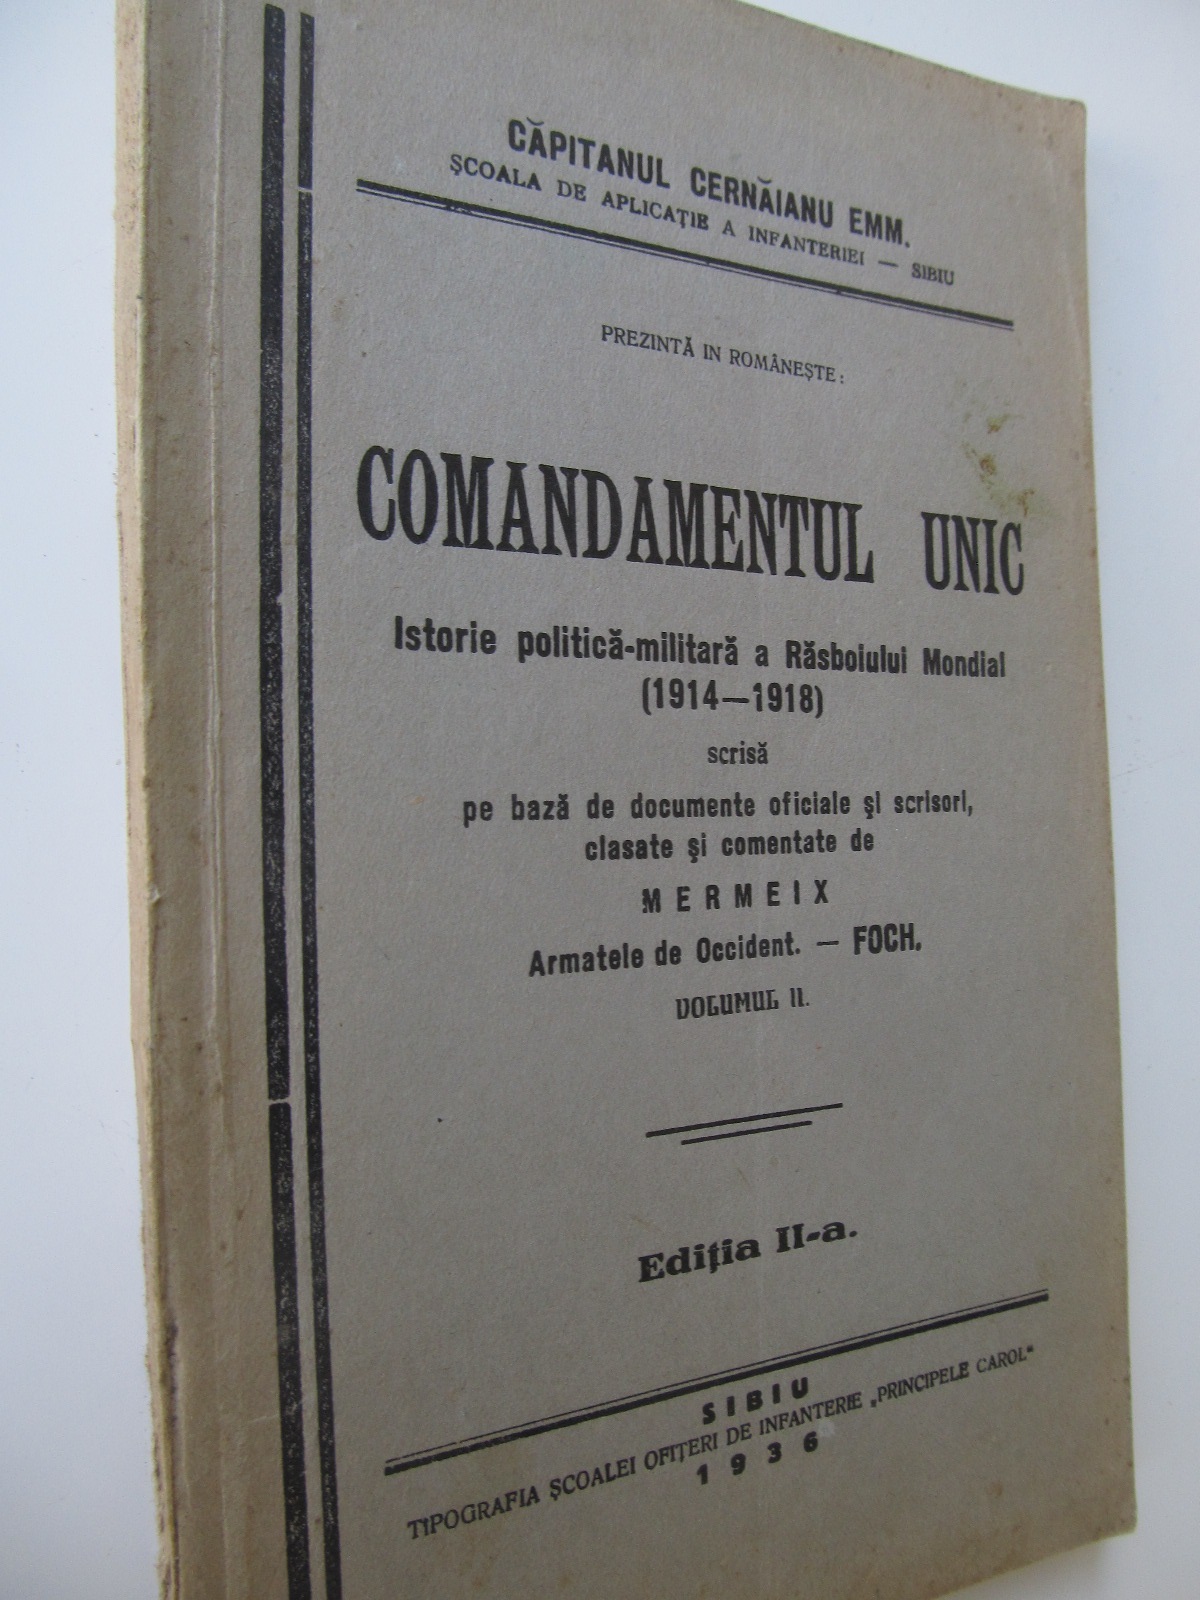 Comandamentul unic -  Istorie politica - militara a Rasboiului Mondial 1914 - 1918 (vol. 2) - Capitan Cernaianu Emm | Detalii carte